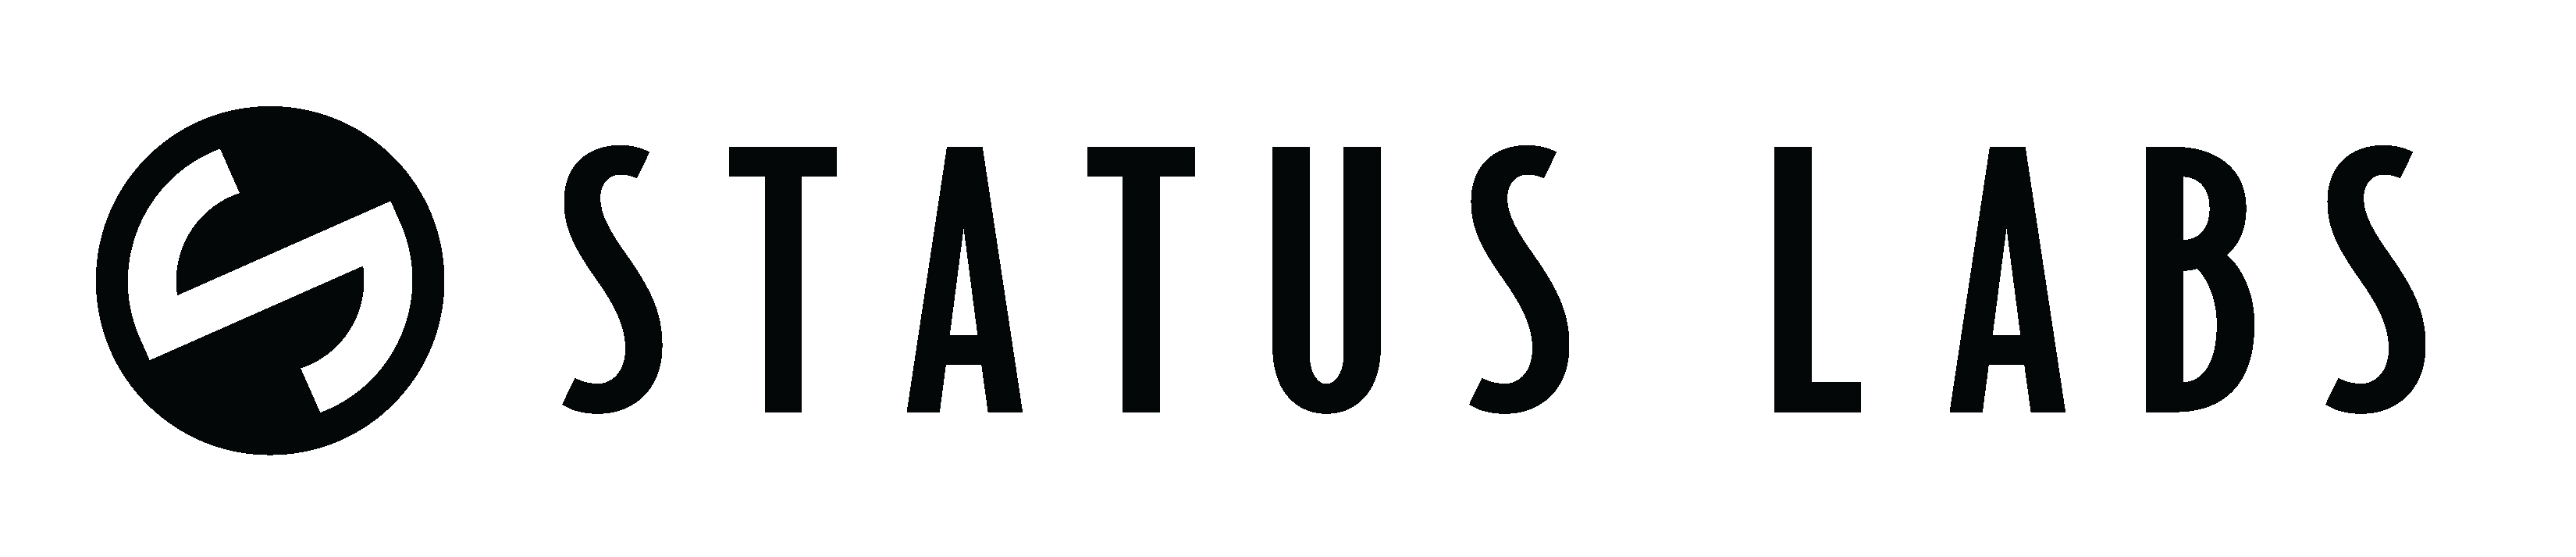 Reputation Logo - 72 Reputation Management Stats for 2019 - Status Labs